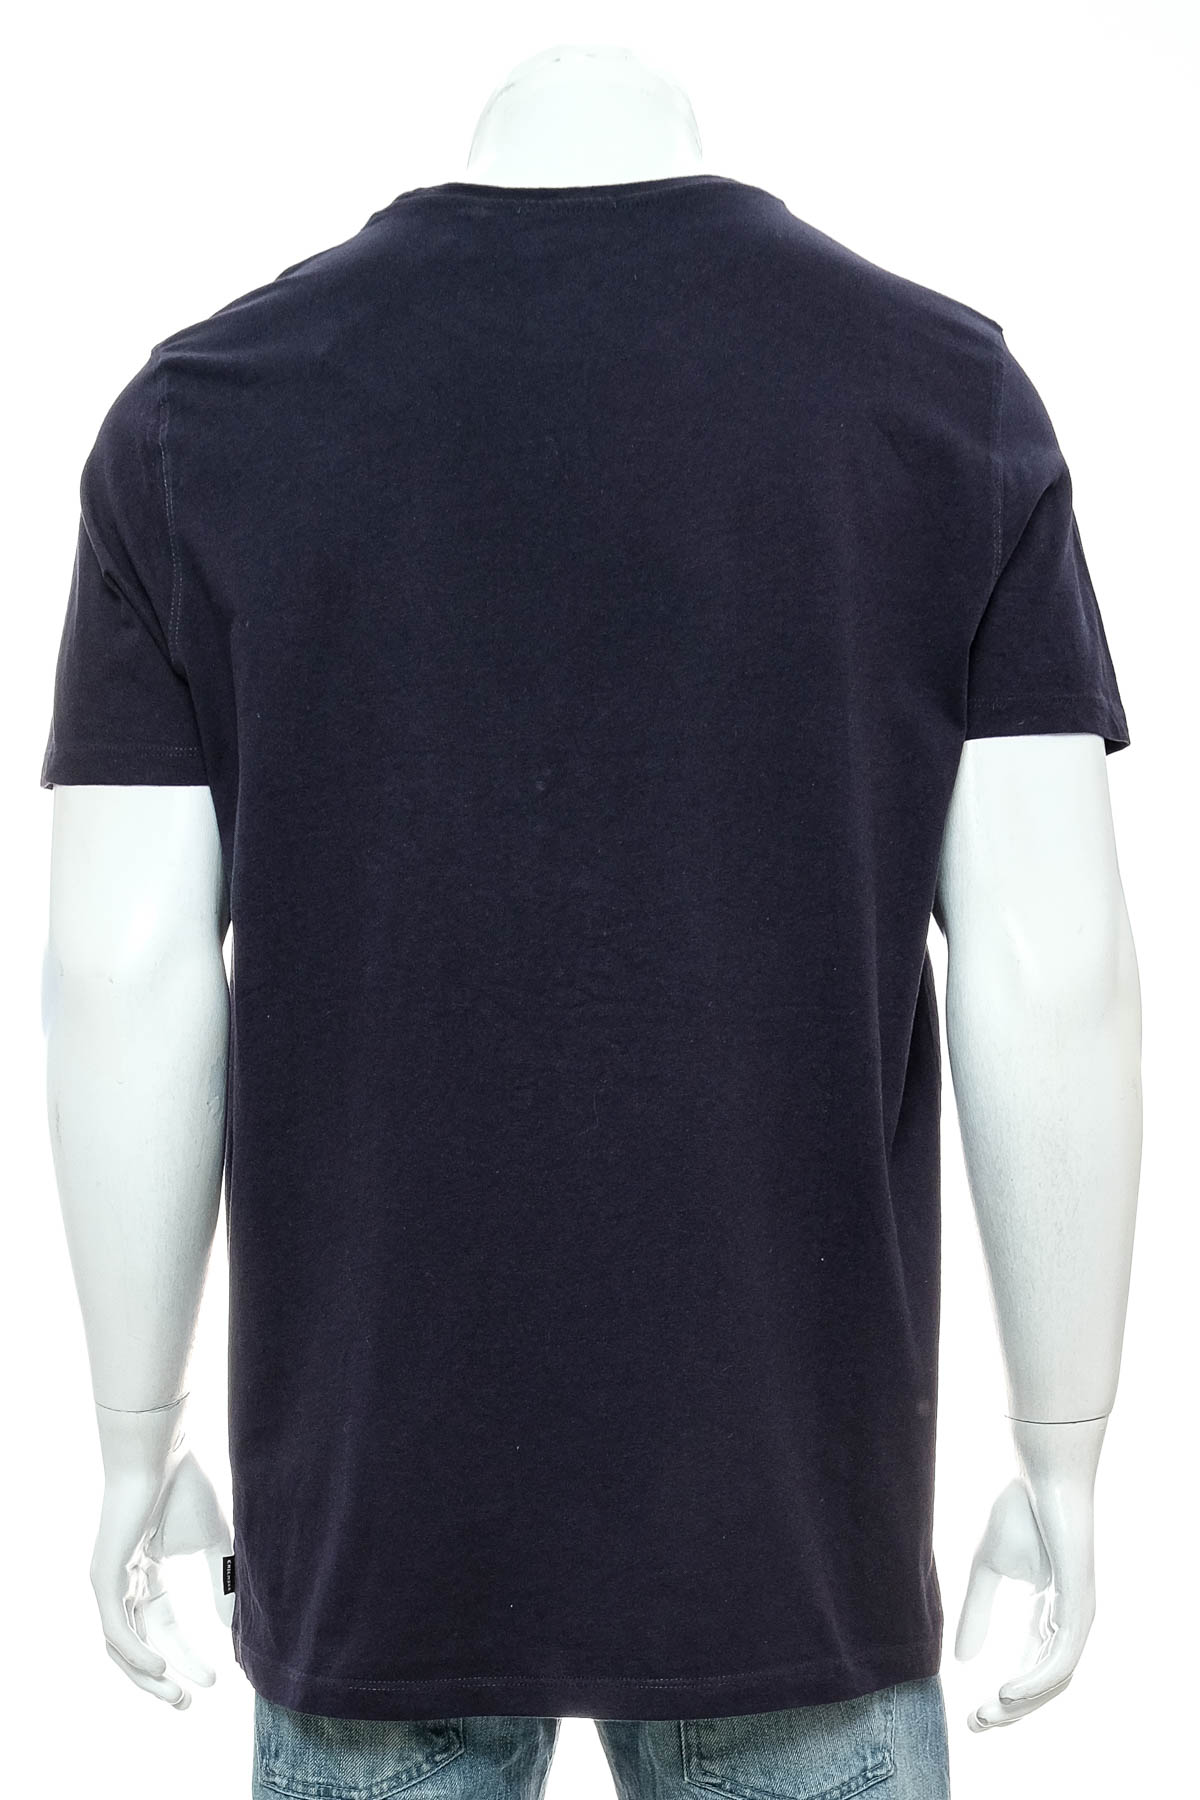 Men's T-shirt - Chiemsee - 1